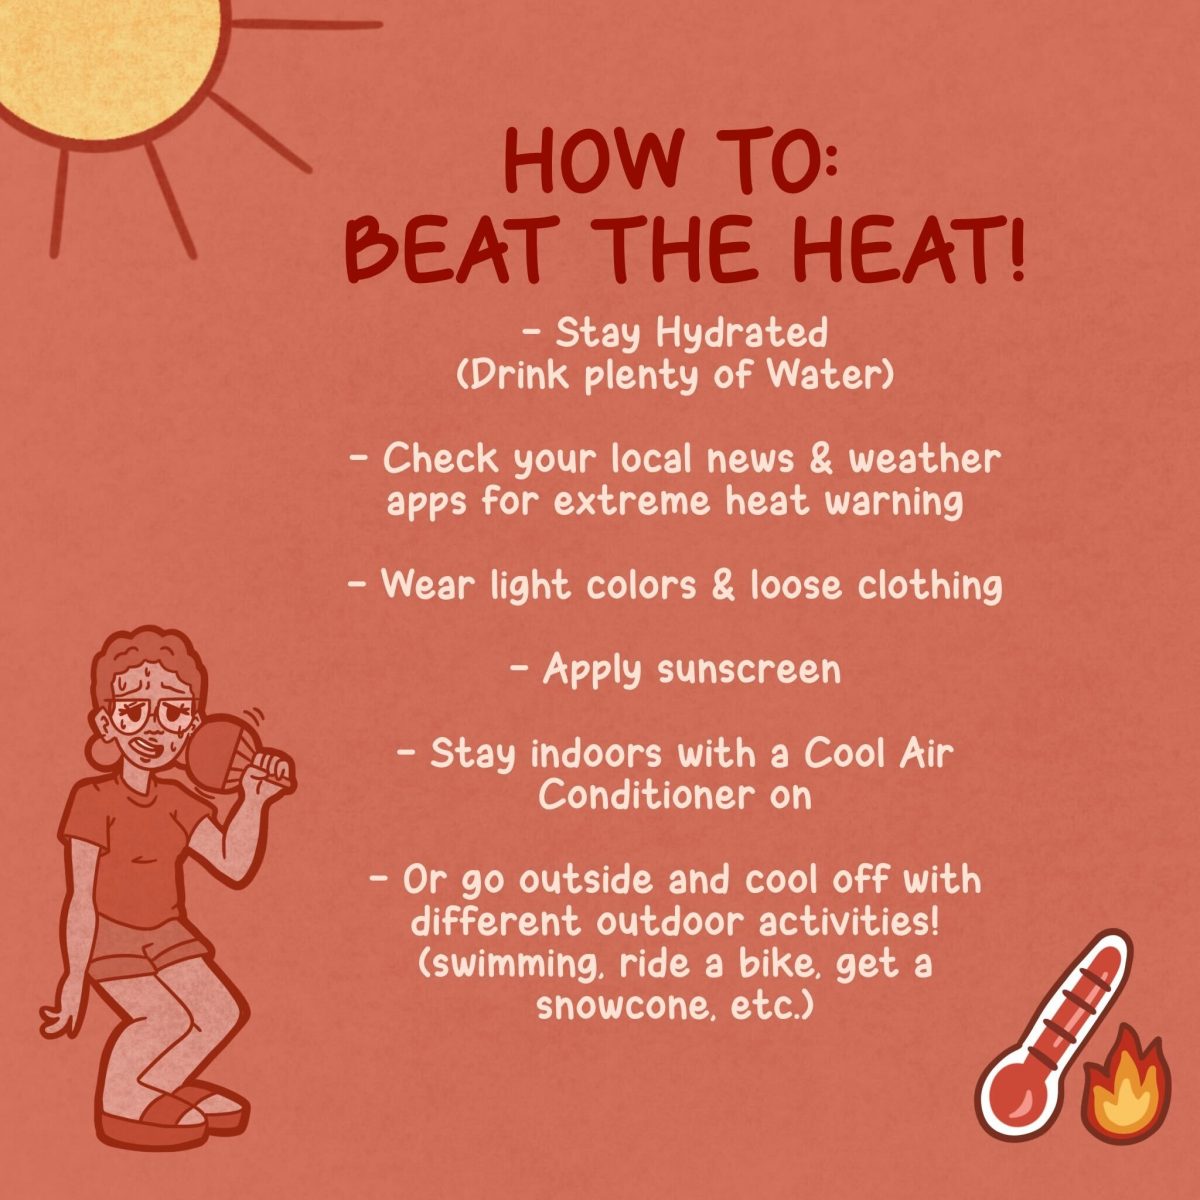 beat+the+heat+info